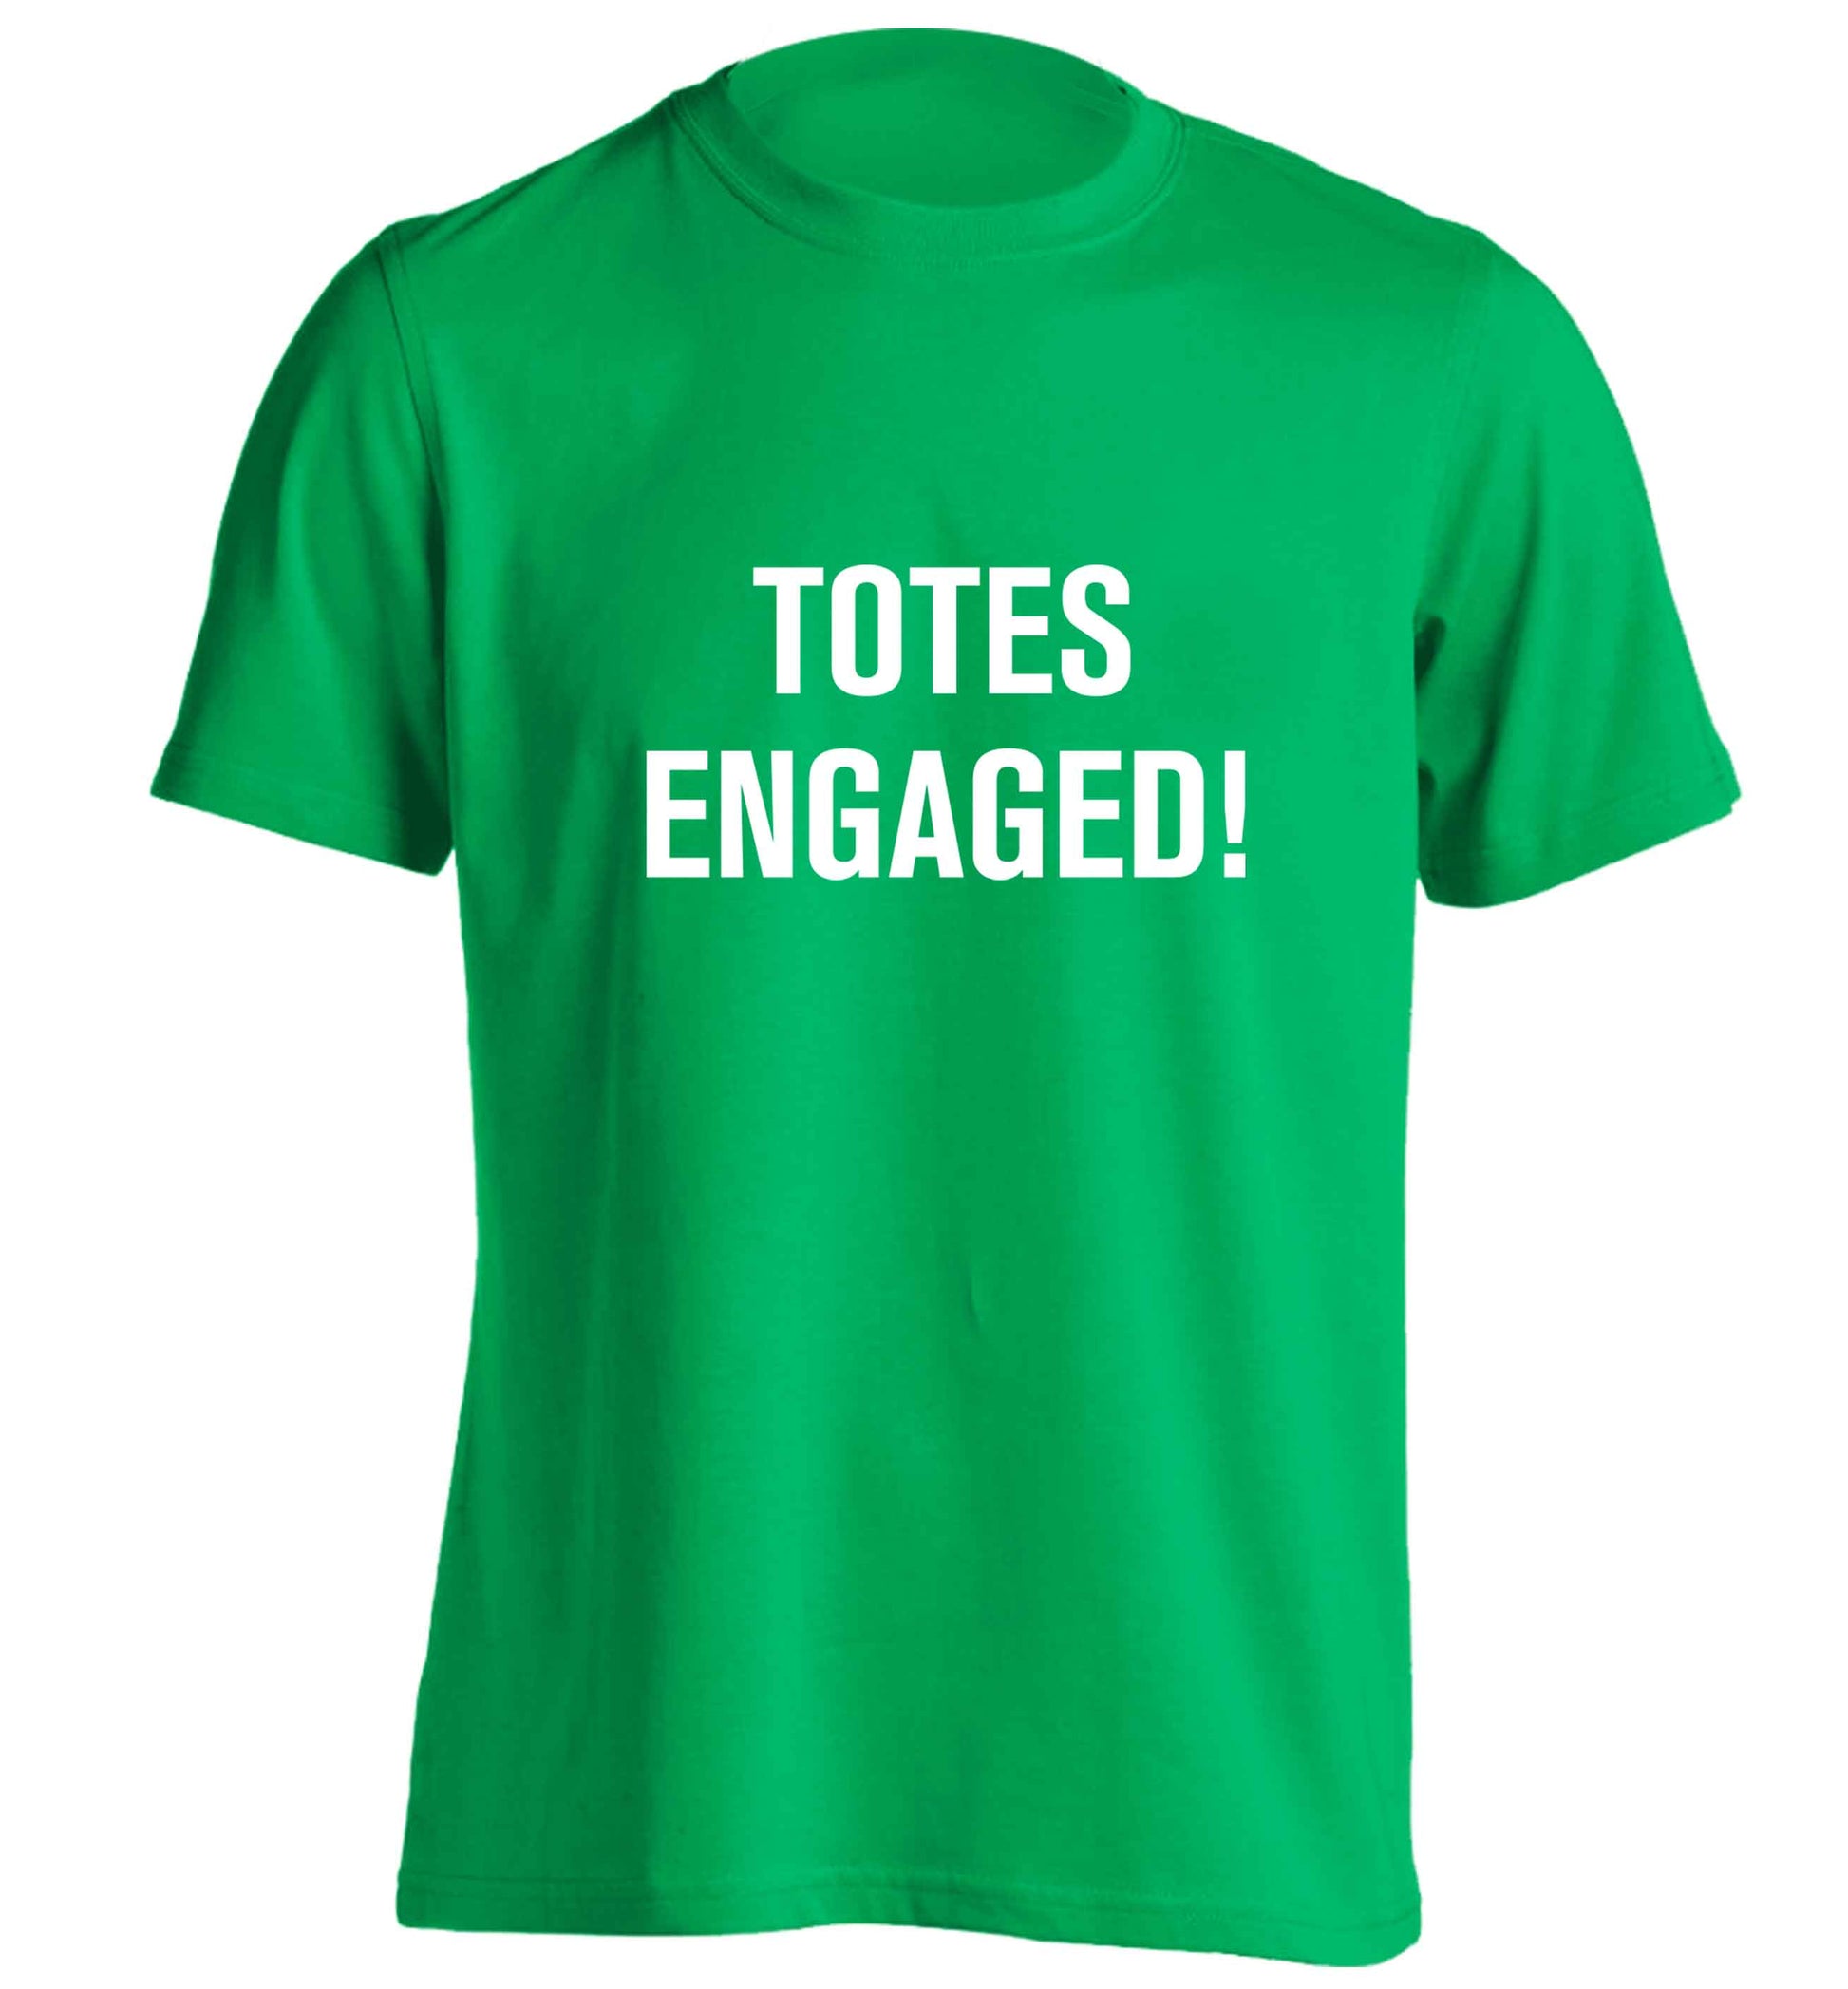 Totes engaged adults unisex green Tshirt 2XL